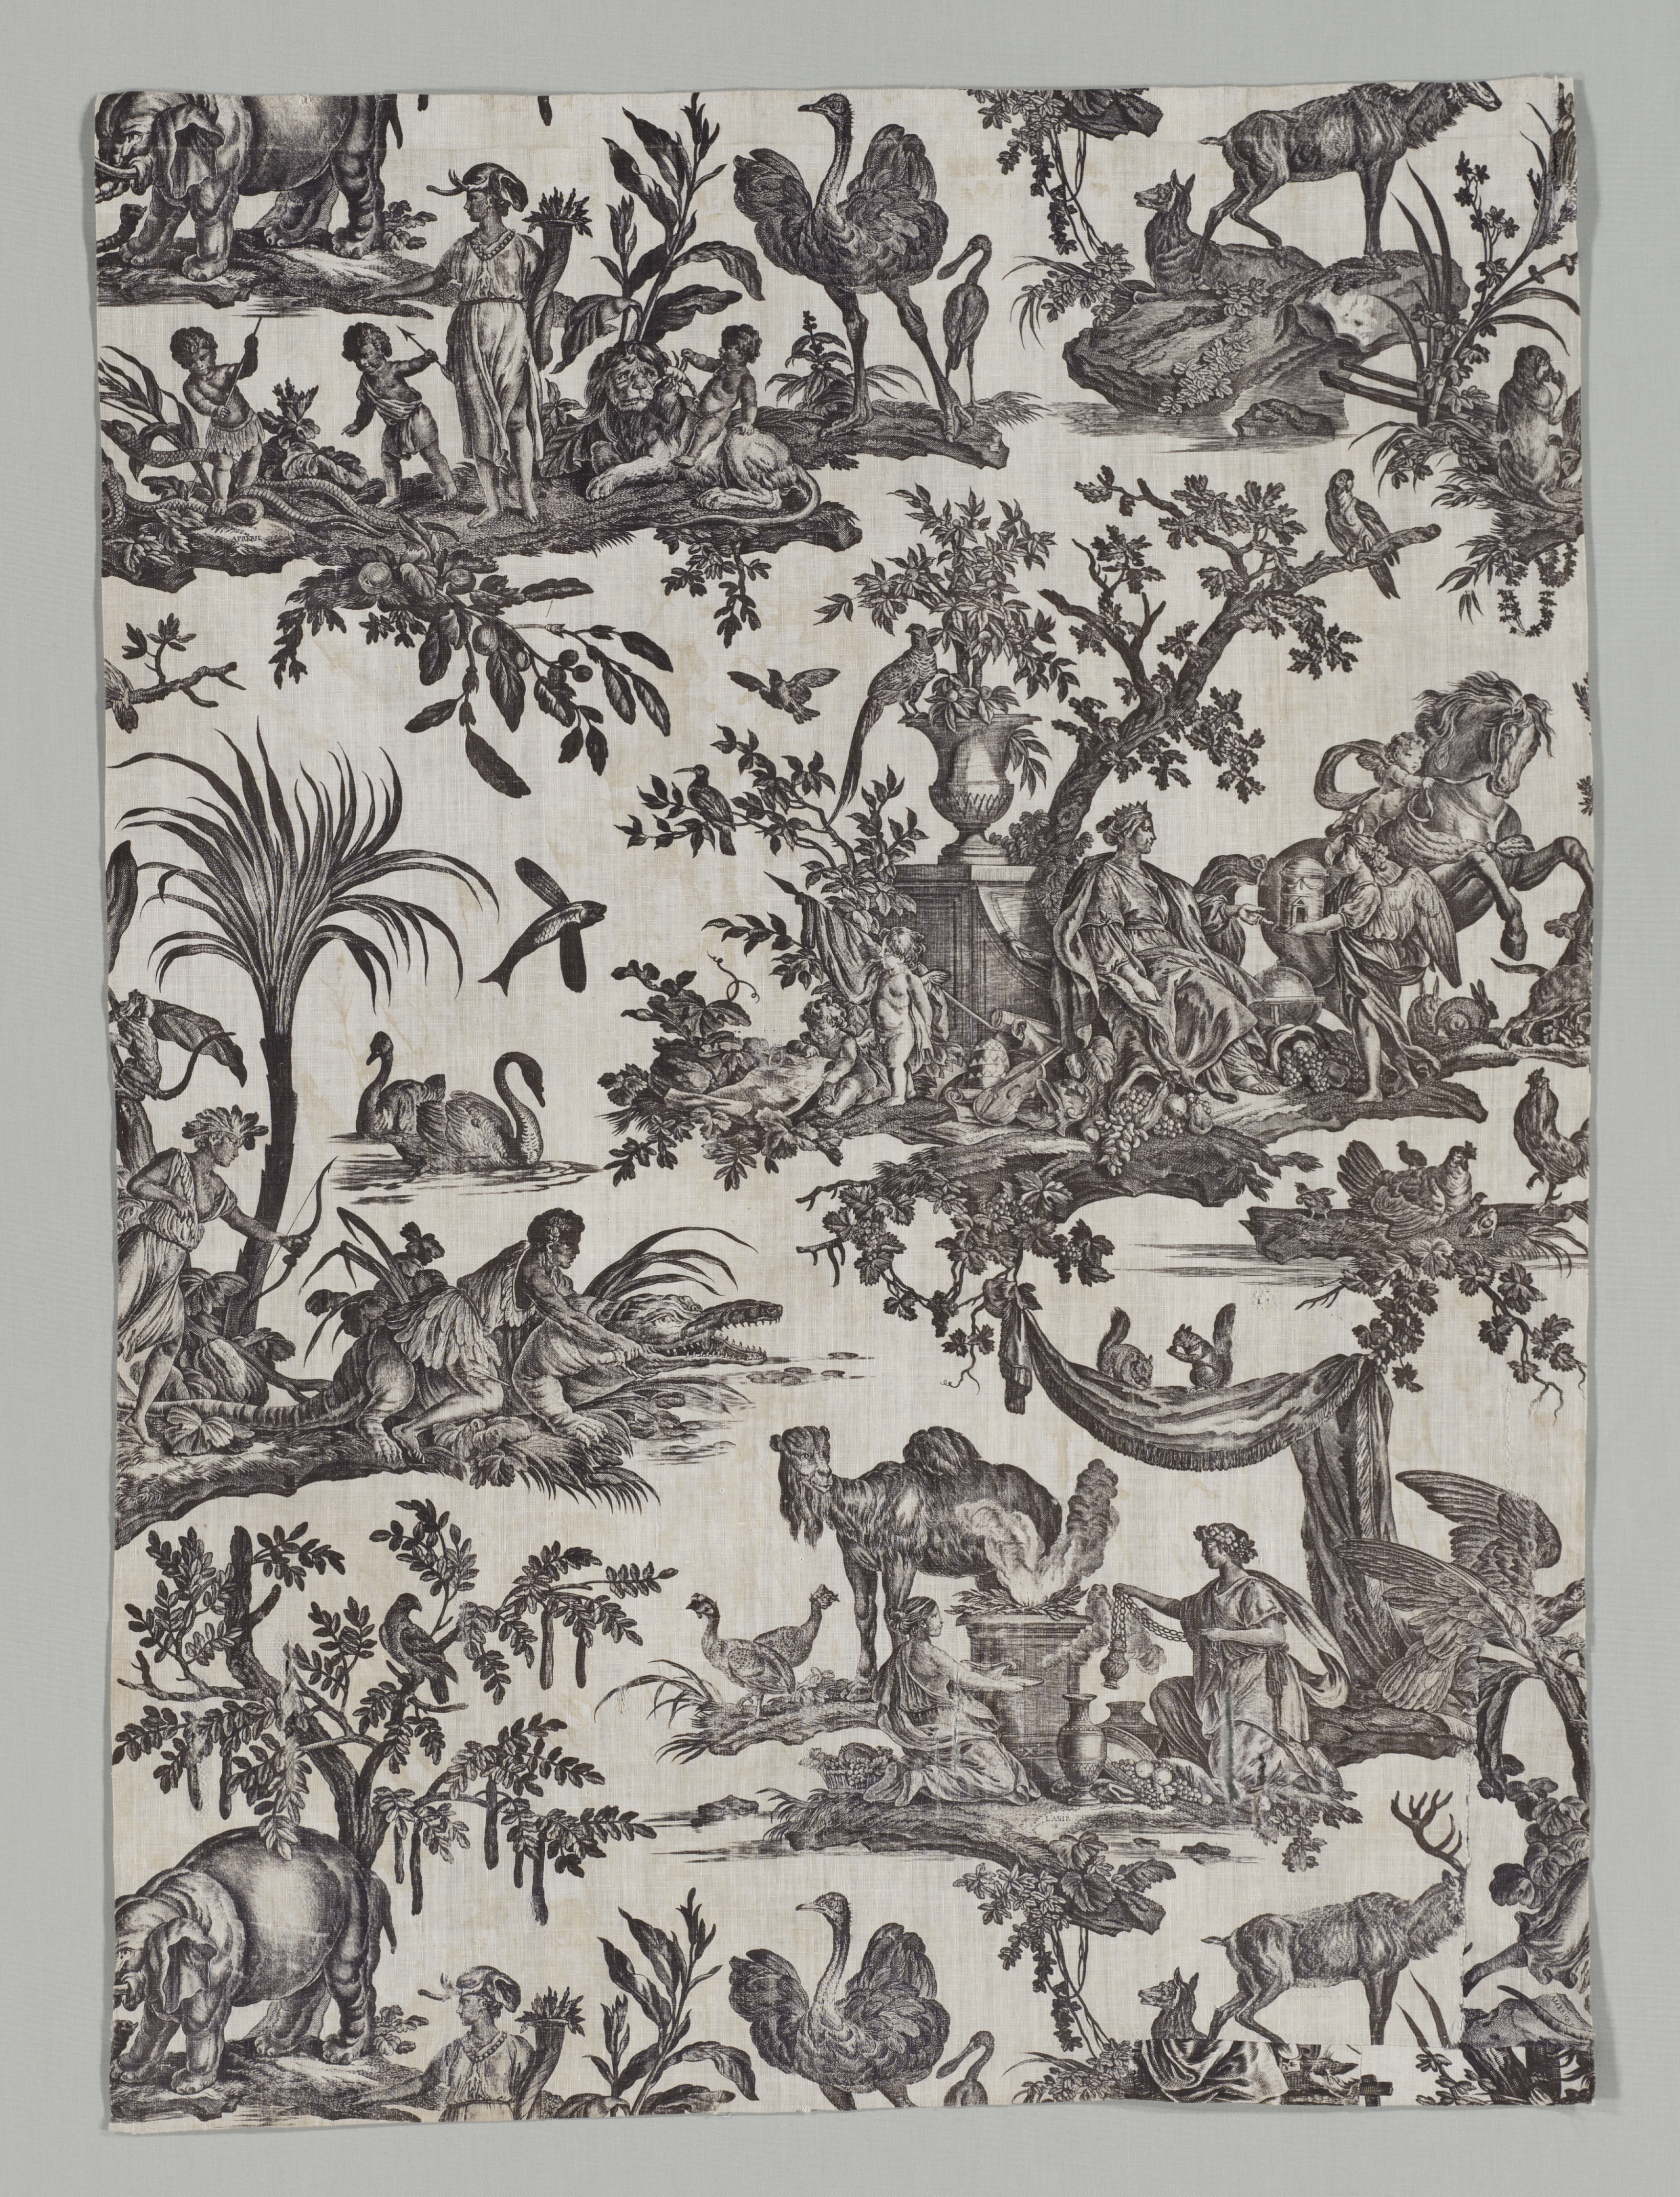 Fragment of Copperplate Printed Cotton with "Les quatres parties du monde" Design